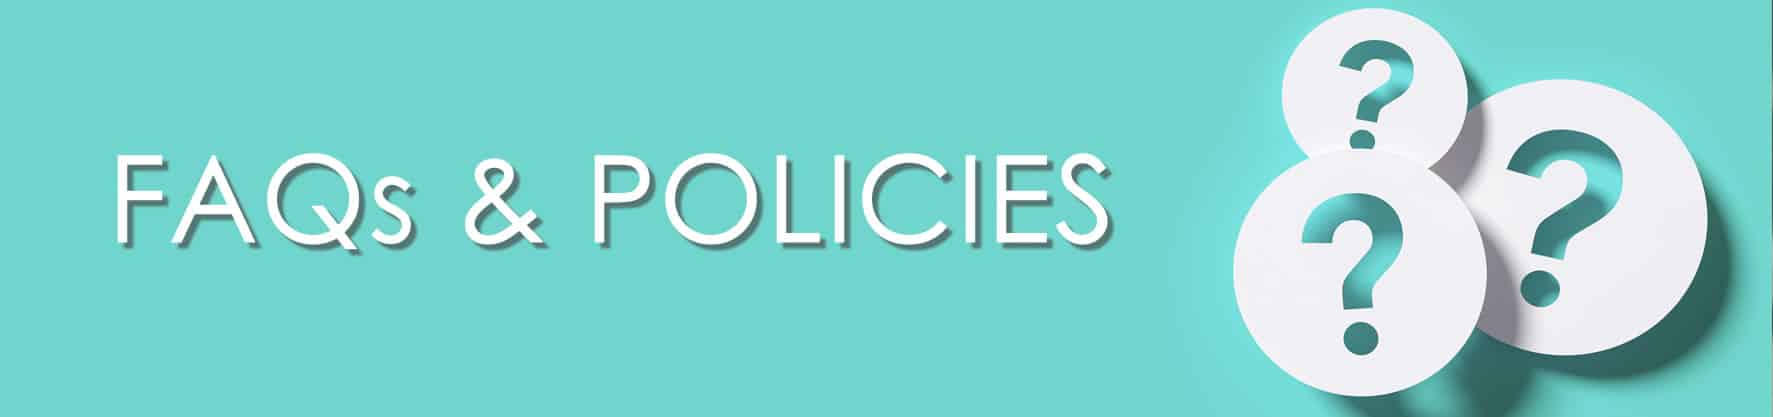 FAQs & Policies